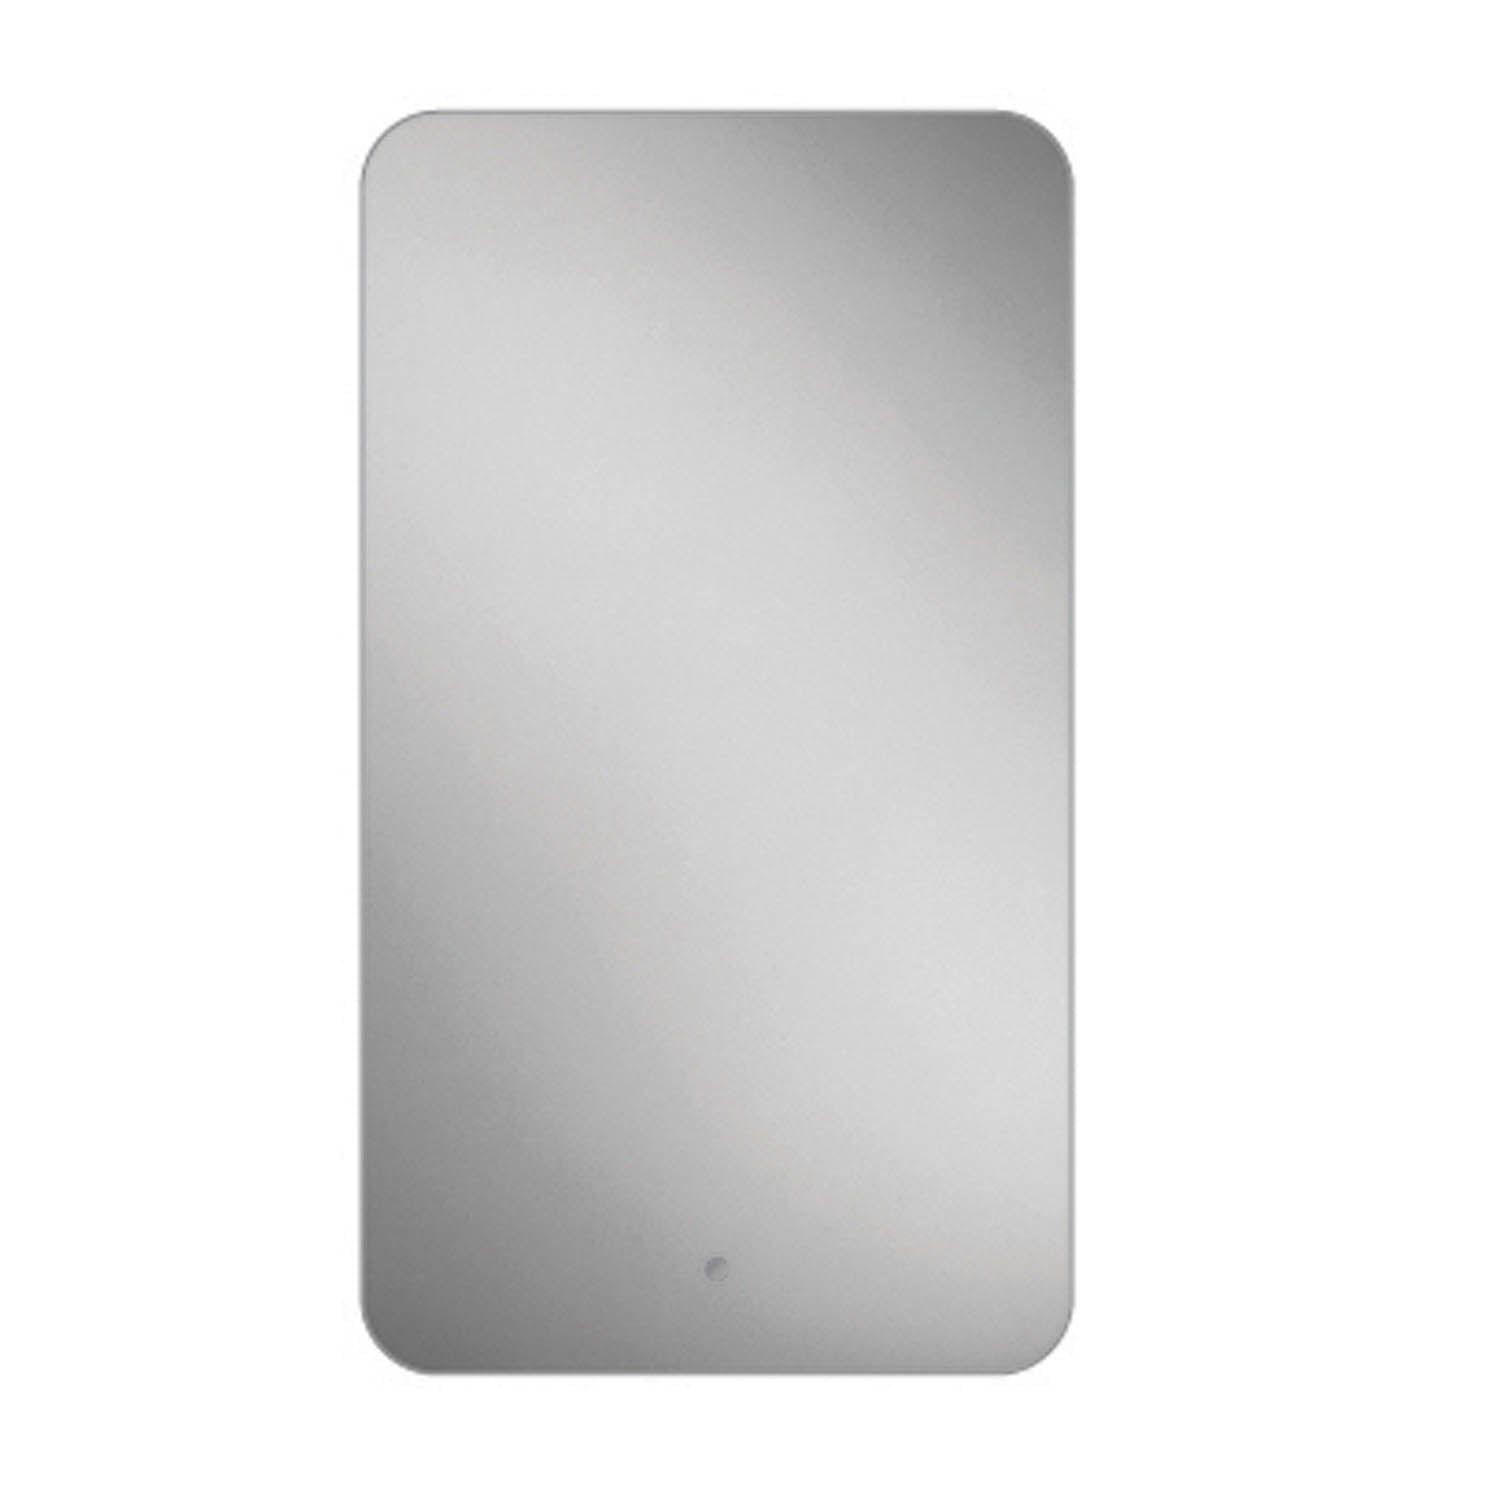 800x400mm Back Lit LED Light Mirror on a white background